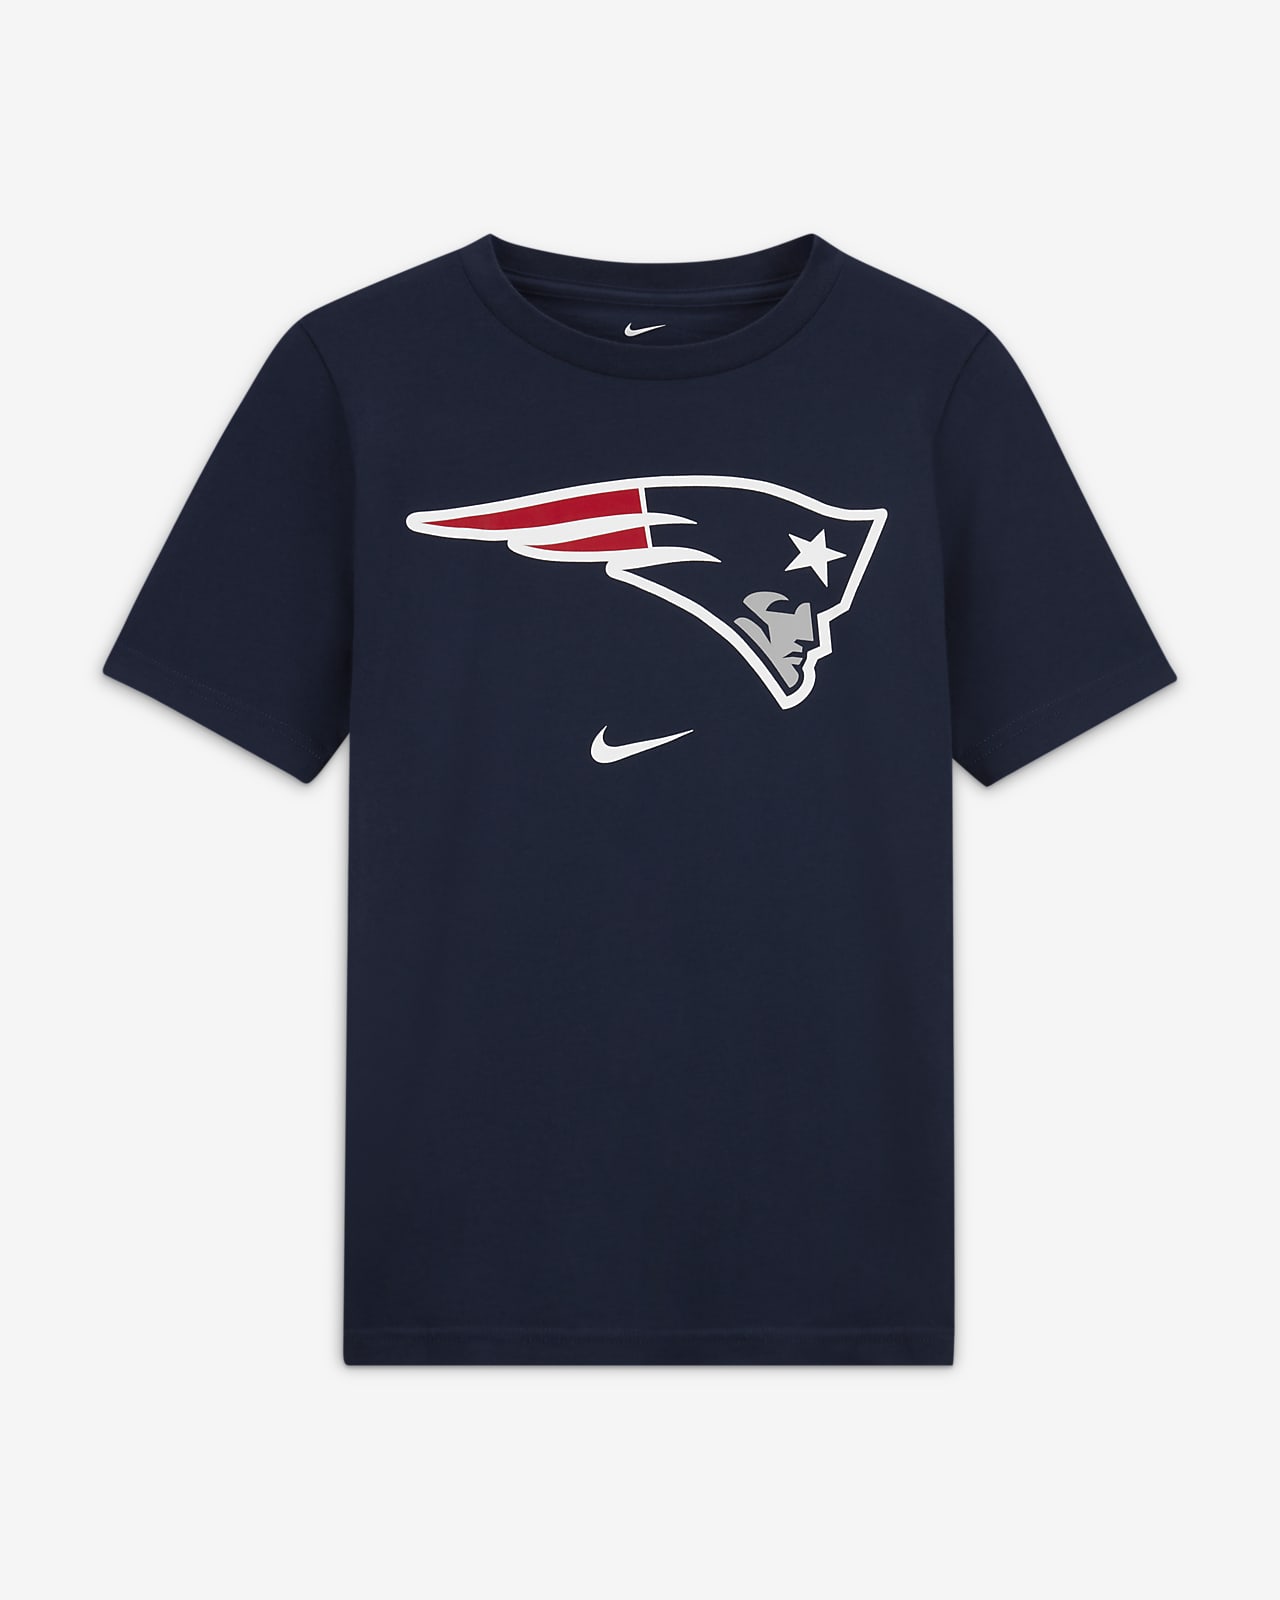 Nike (NFL New England Patriots) Samarreta - Nen/a